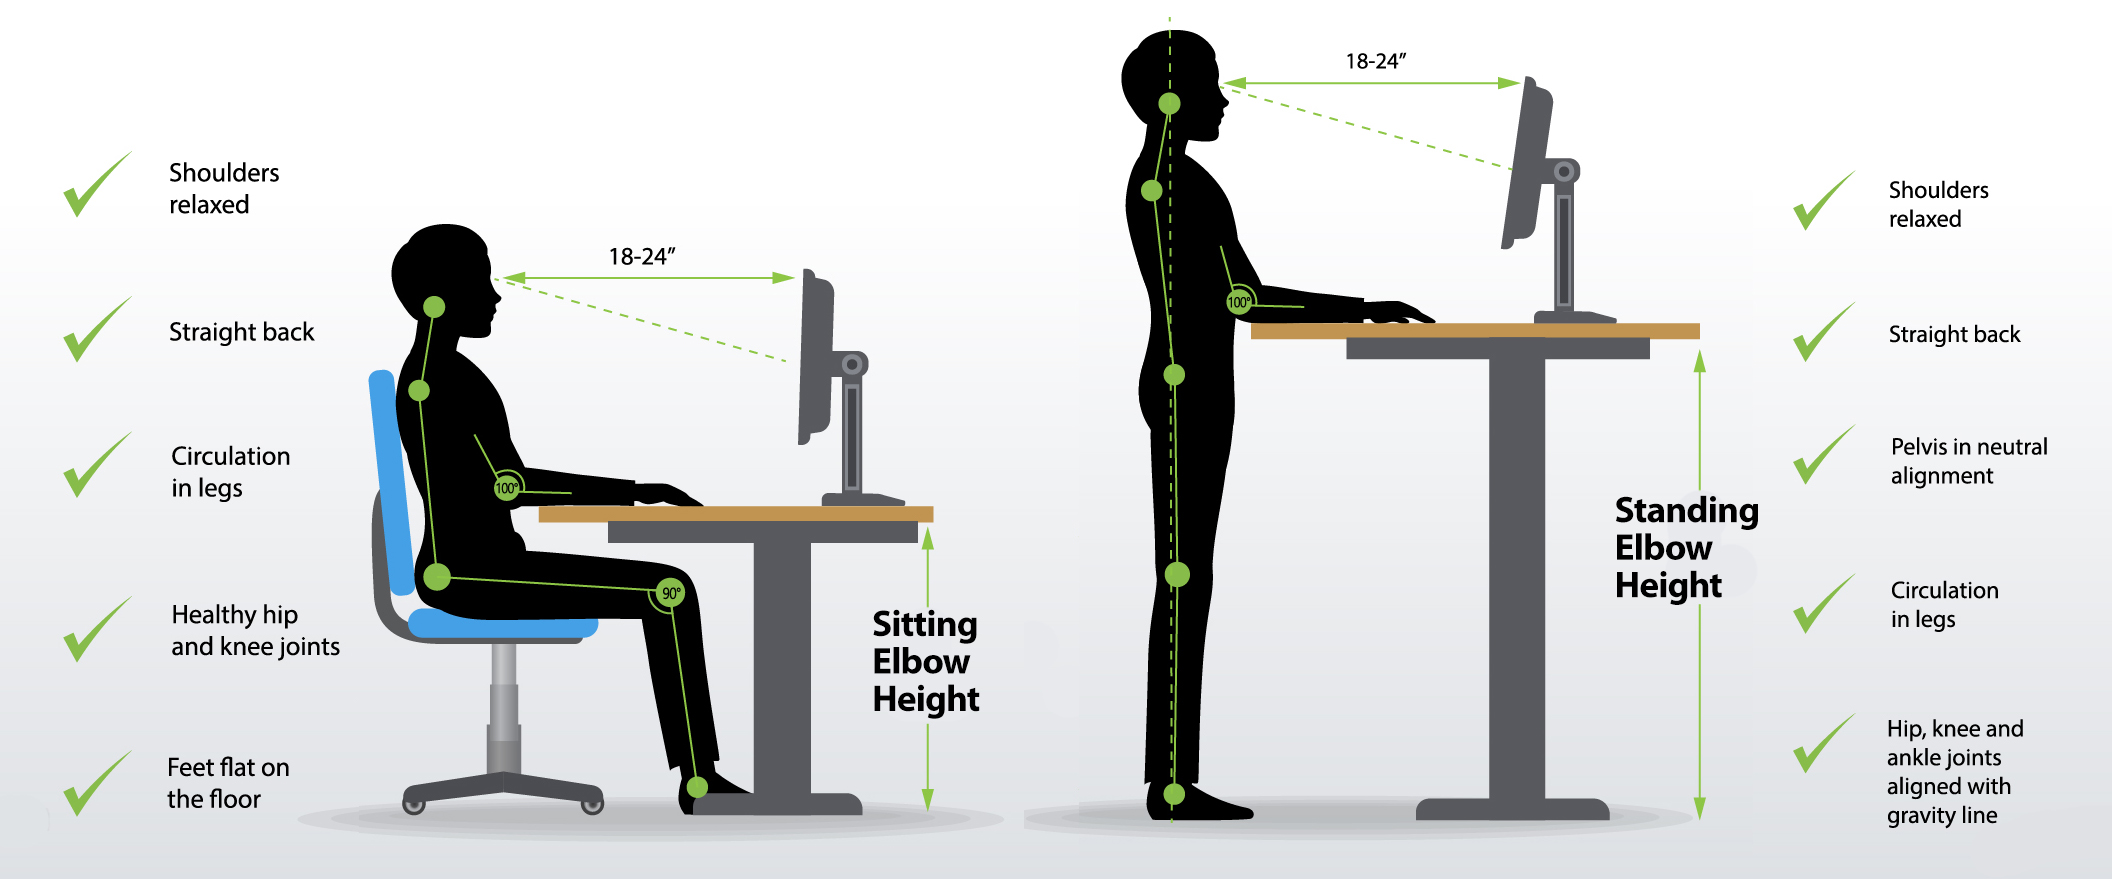 Proper desk ergonomics for sitting and standing